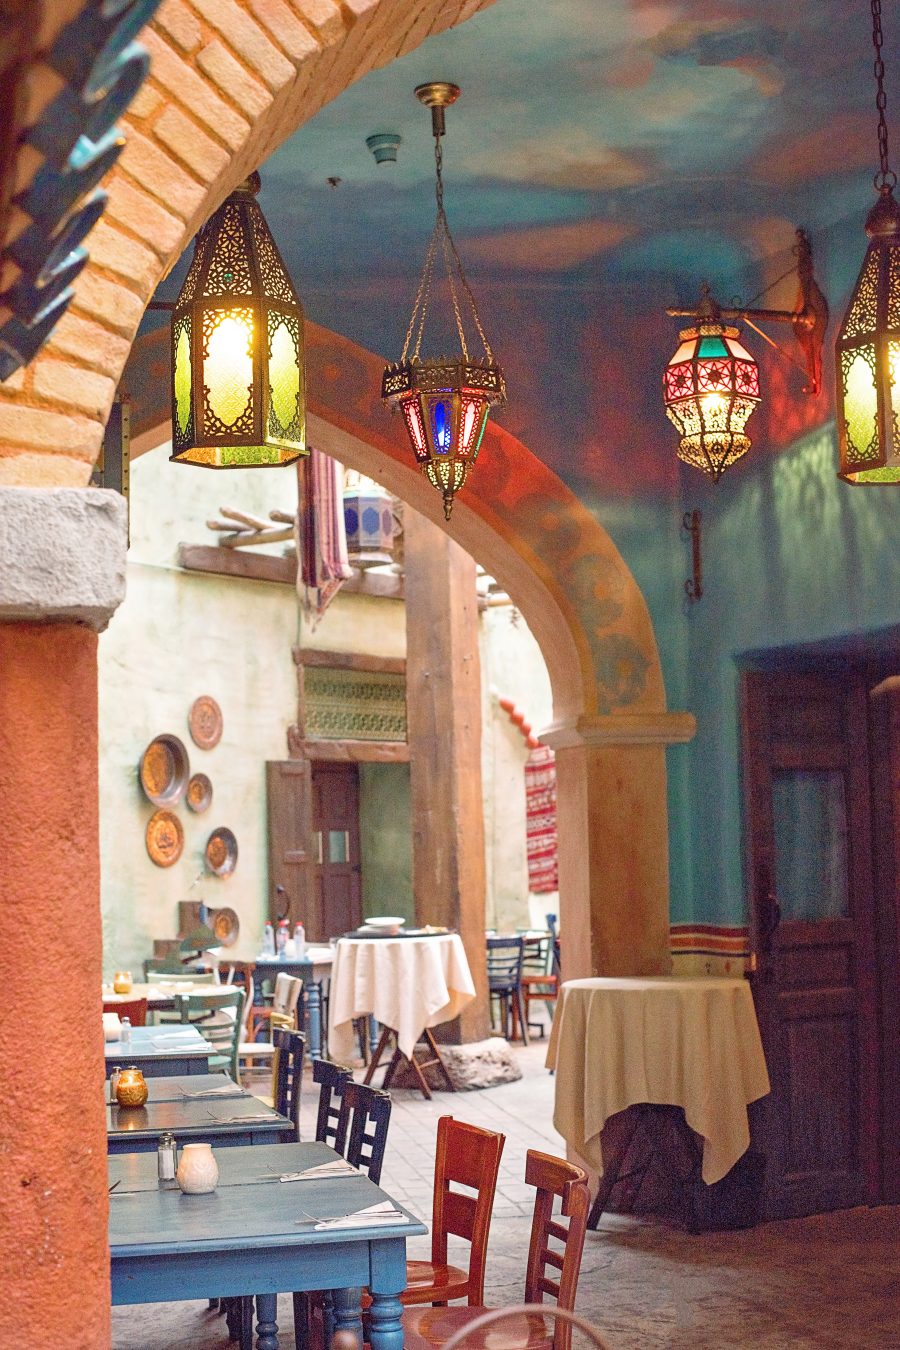 Disneyland Paris Agrabah cafe